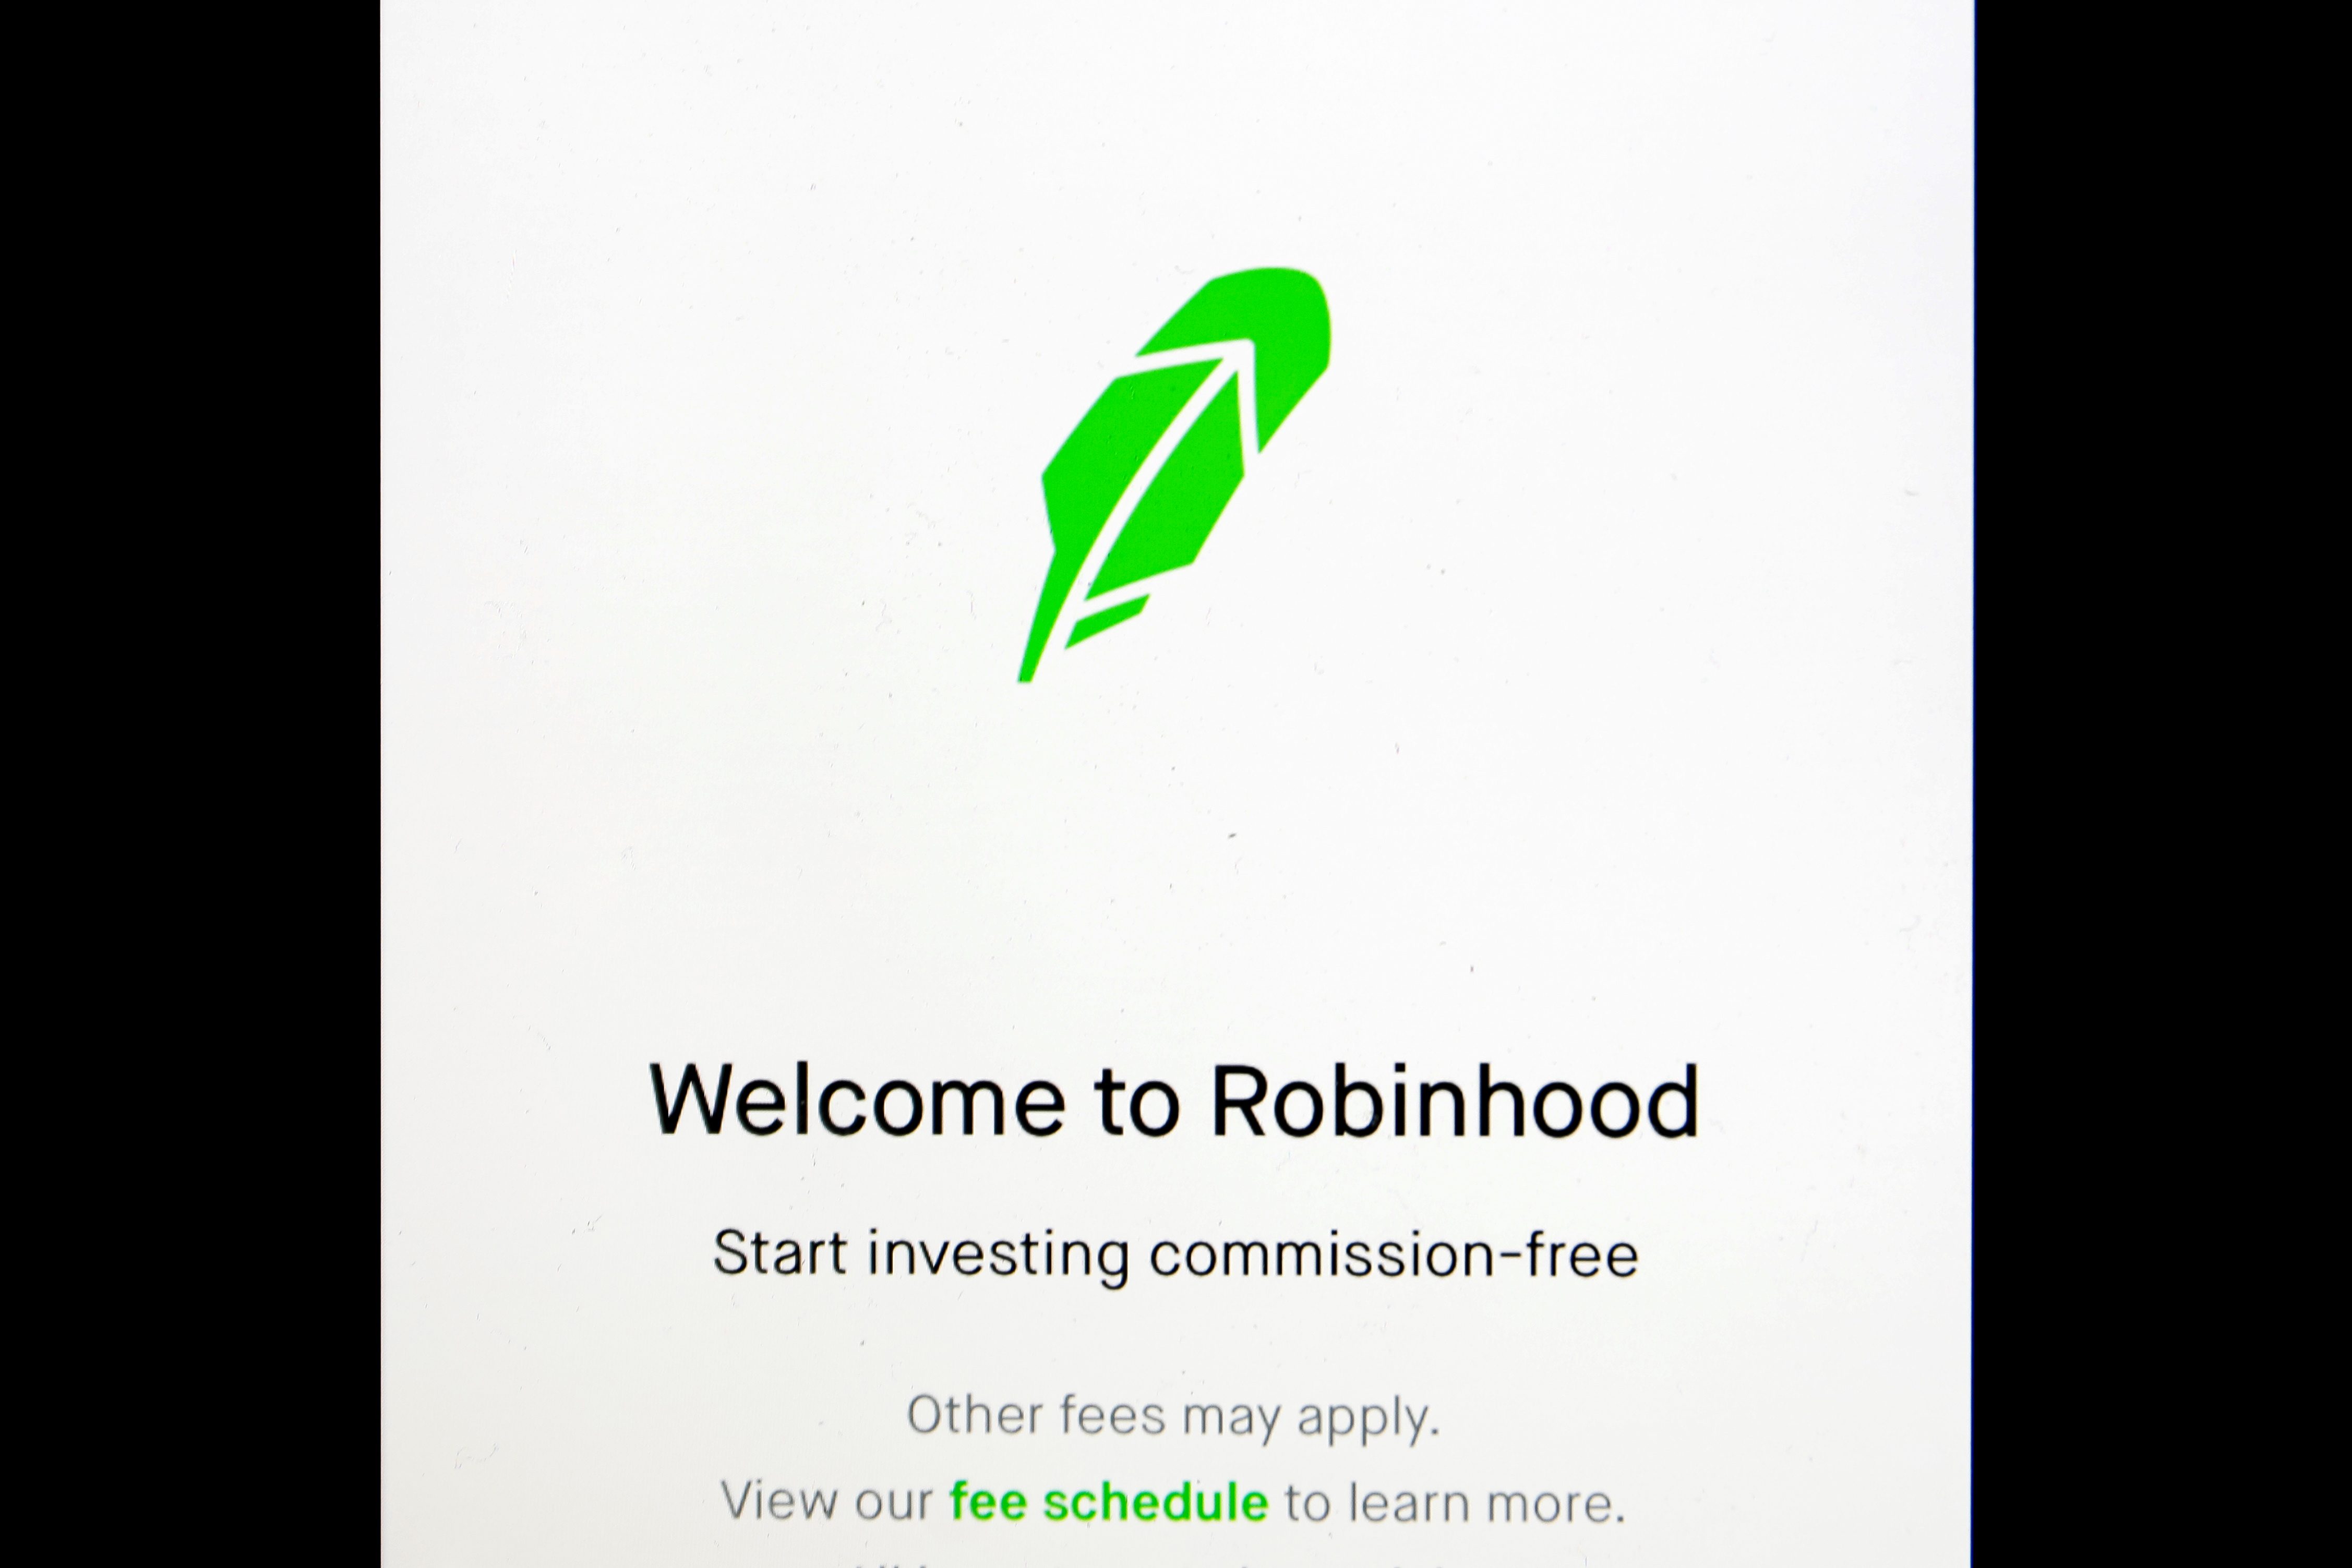 Robinhood raises $1 billion of fresh funding from existing investors